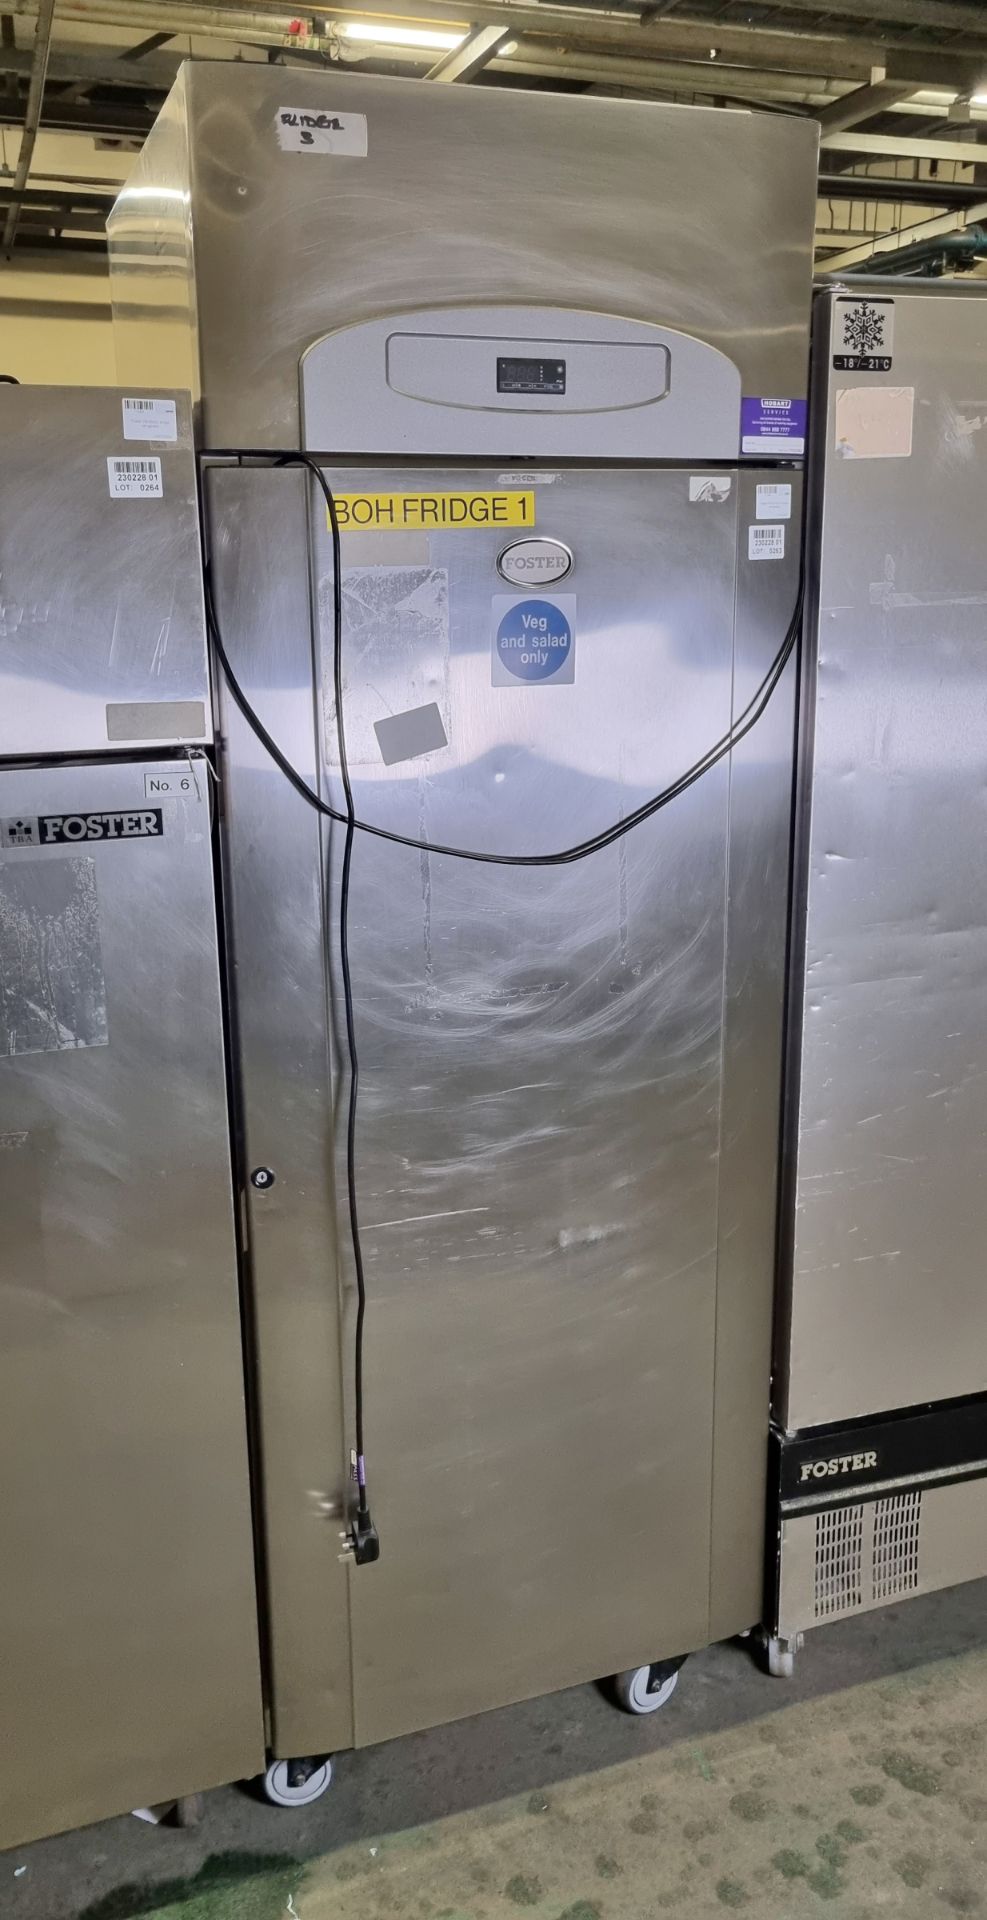 Foster PREMG600H single refrigerator - Image 2 of 4